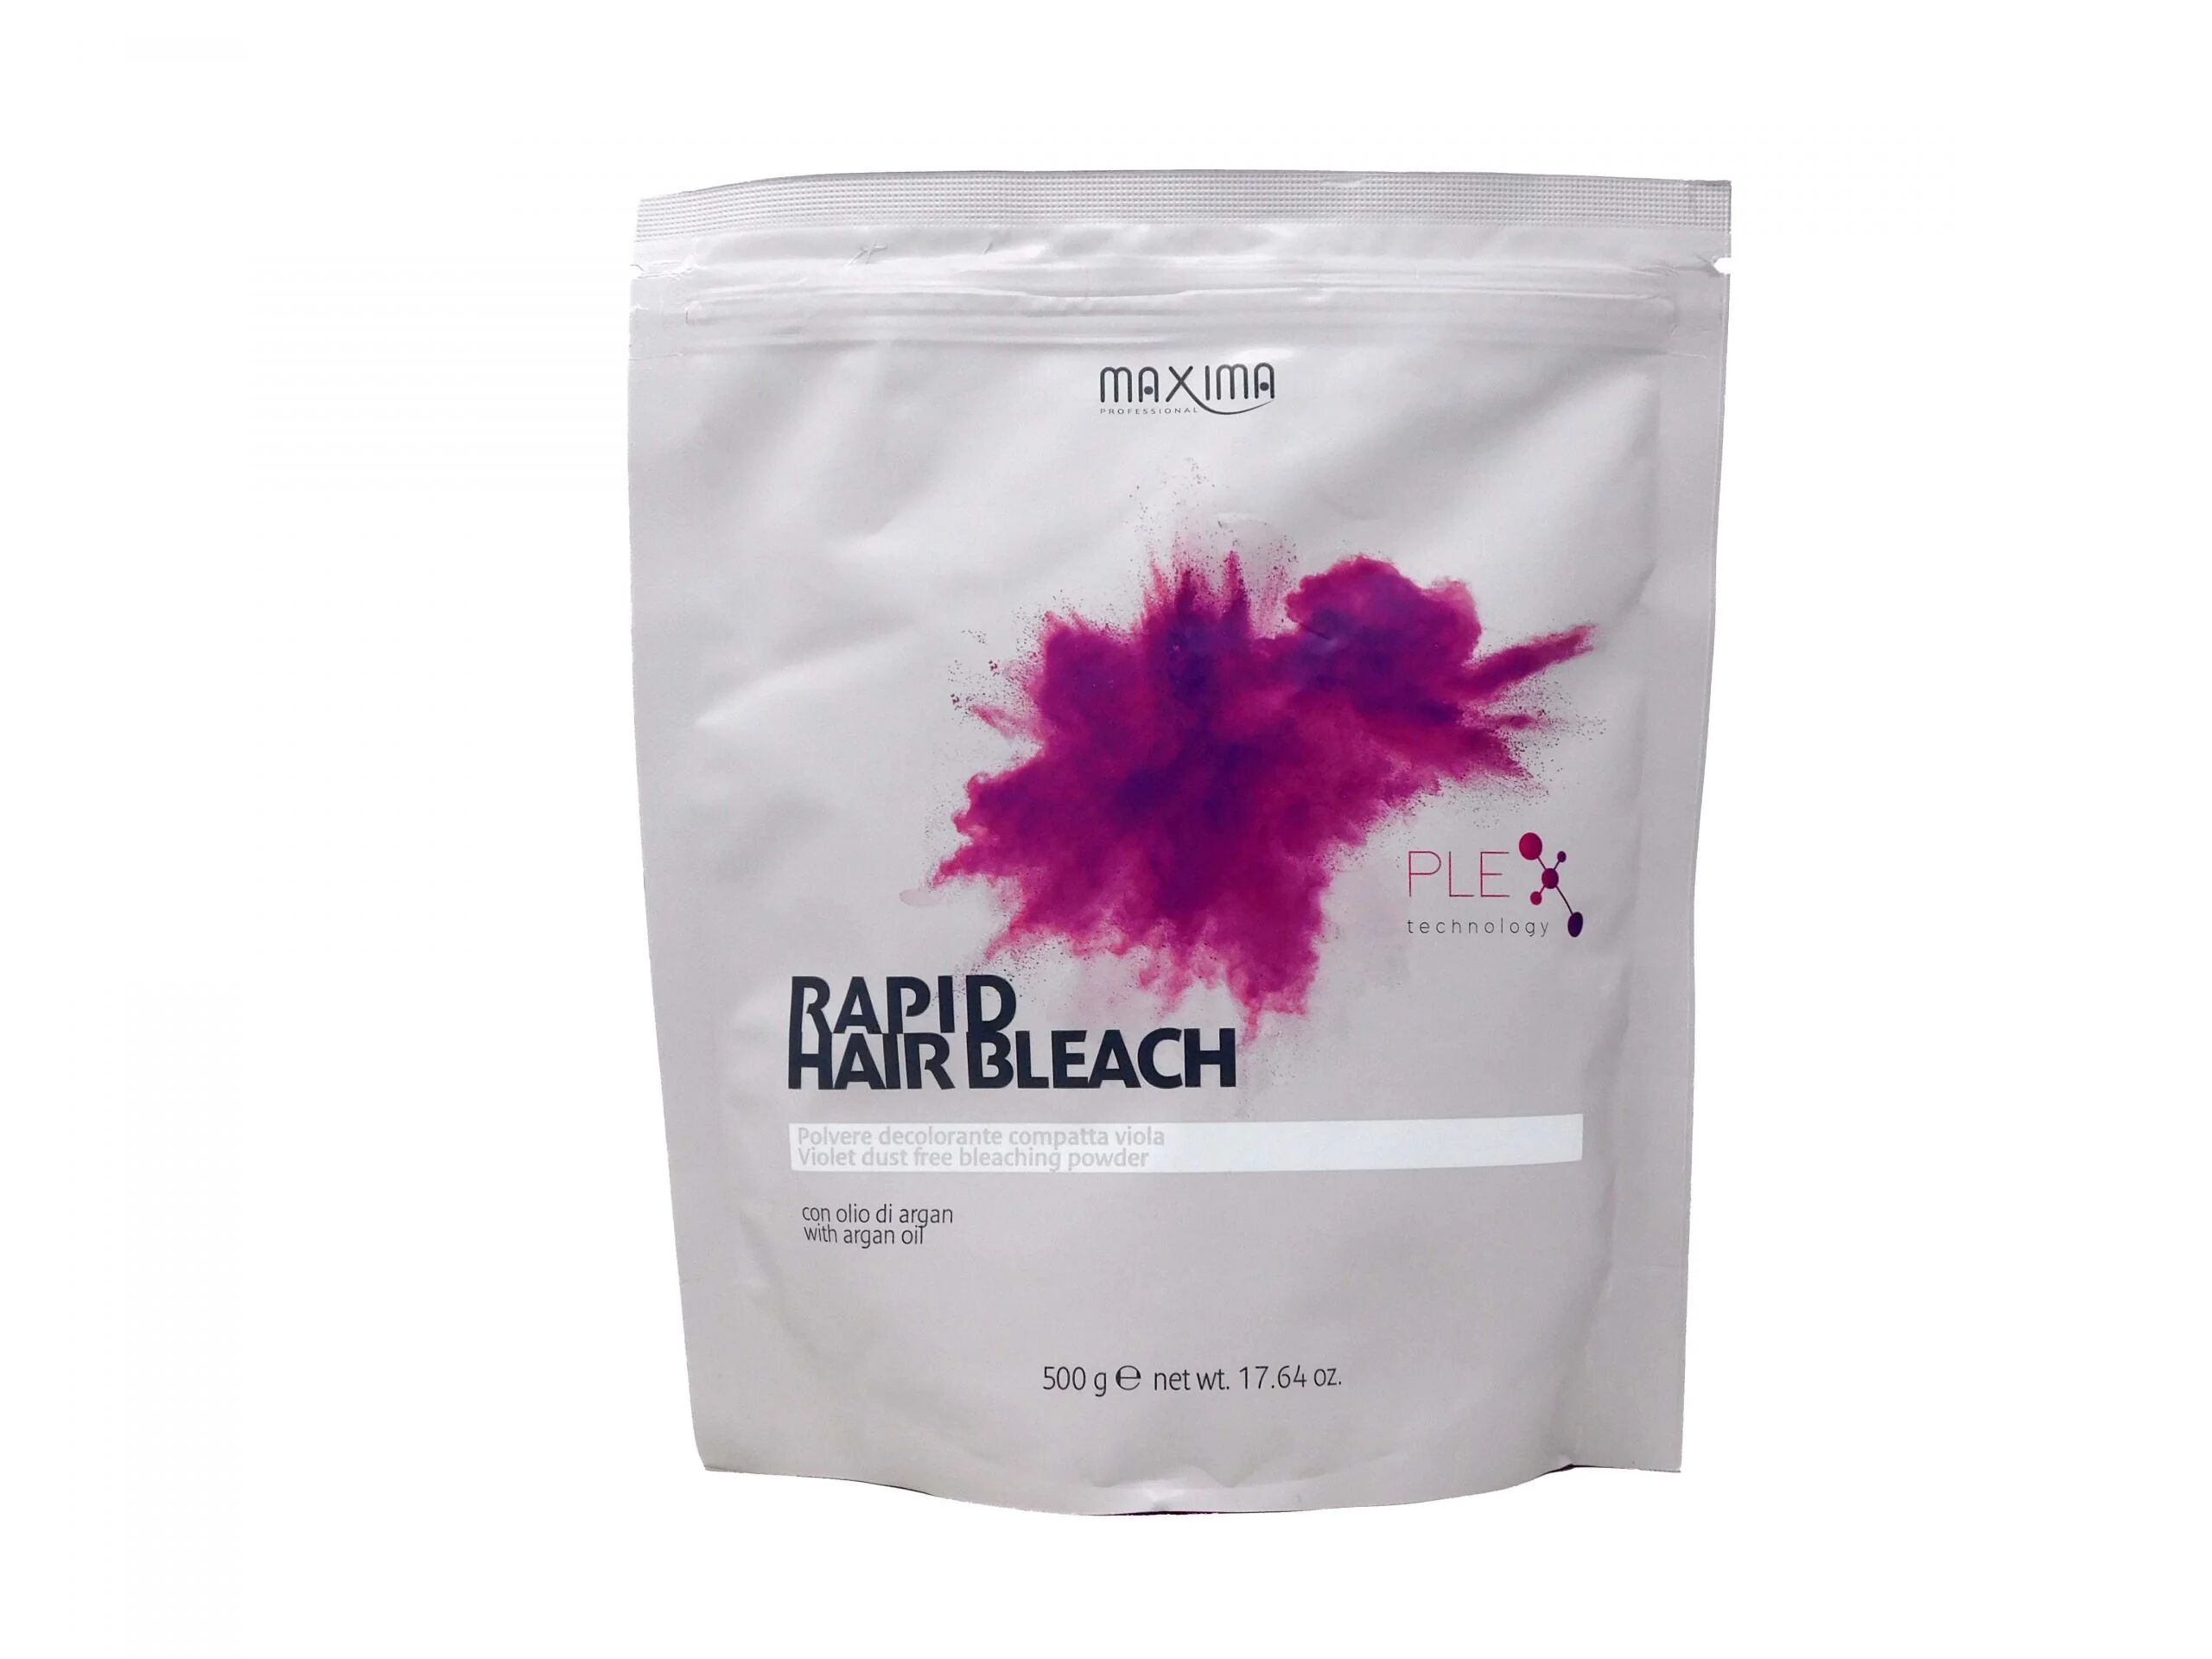 maxima professional maxima polvere decolorante rapid hair bleach viola 500 ml